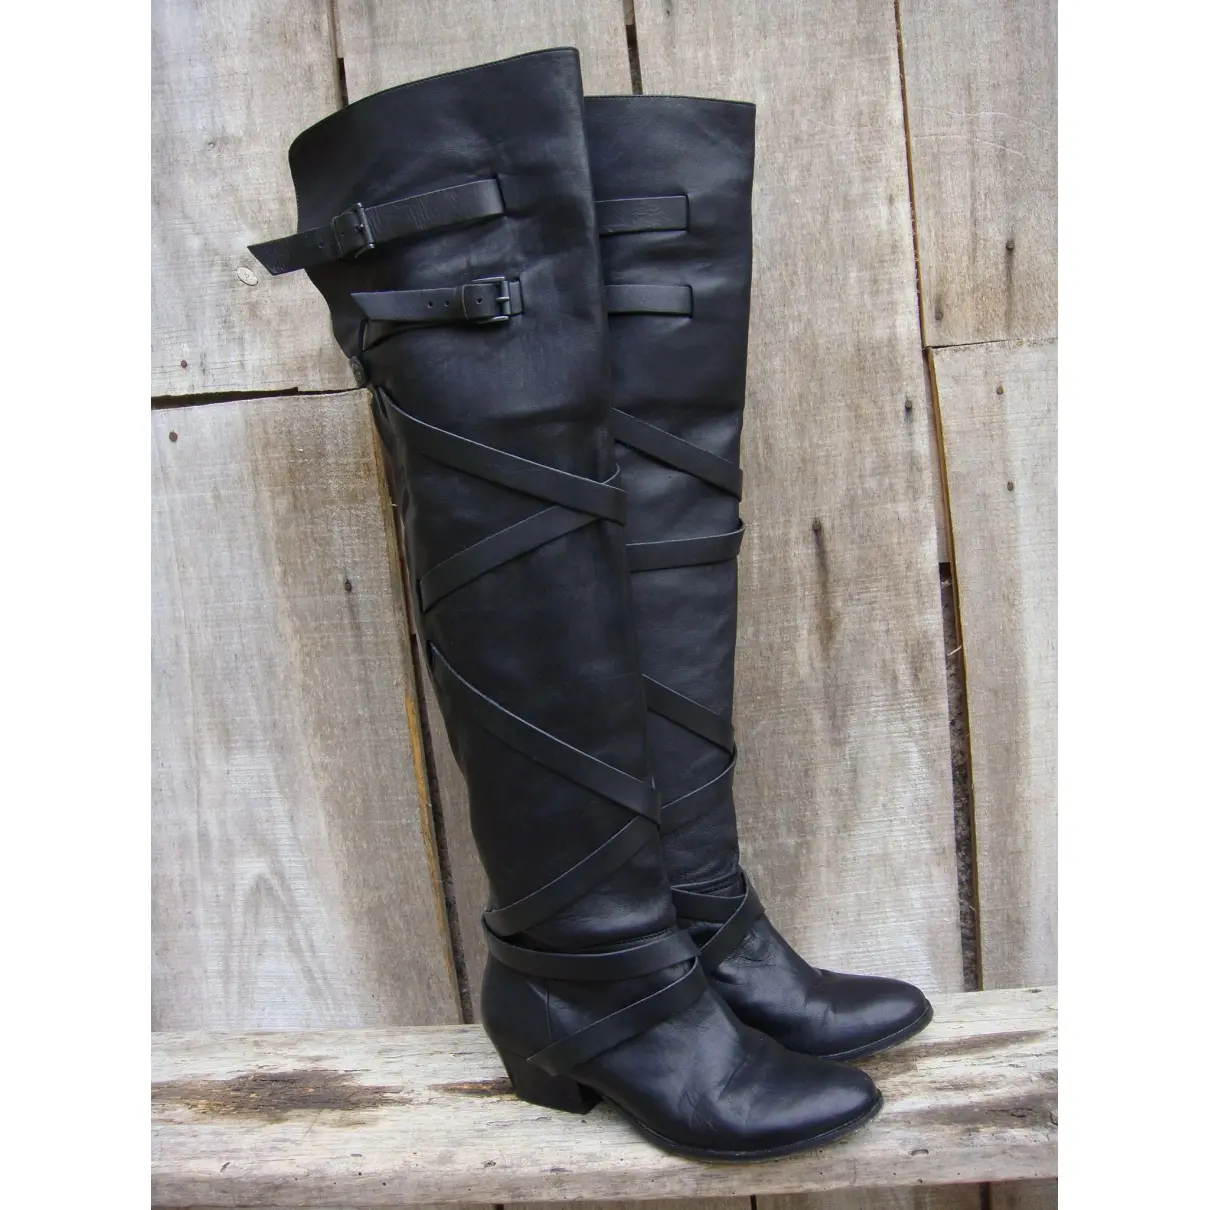 Les Petites Leather boots for sale